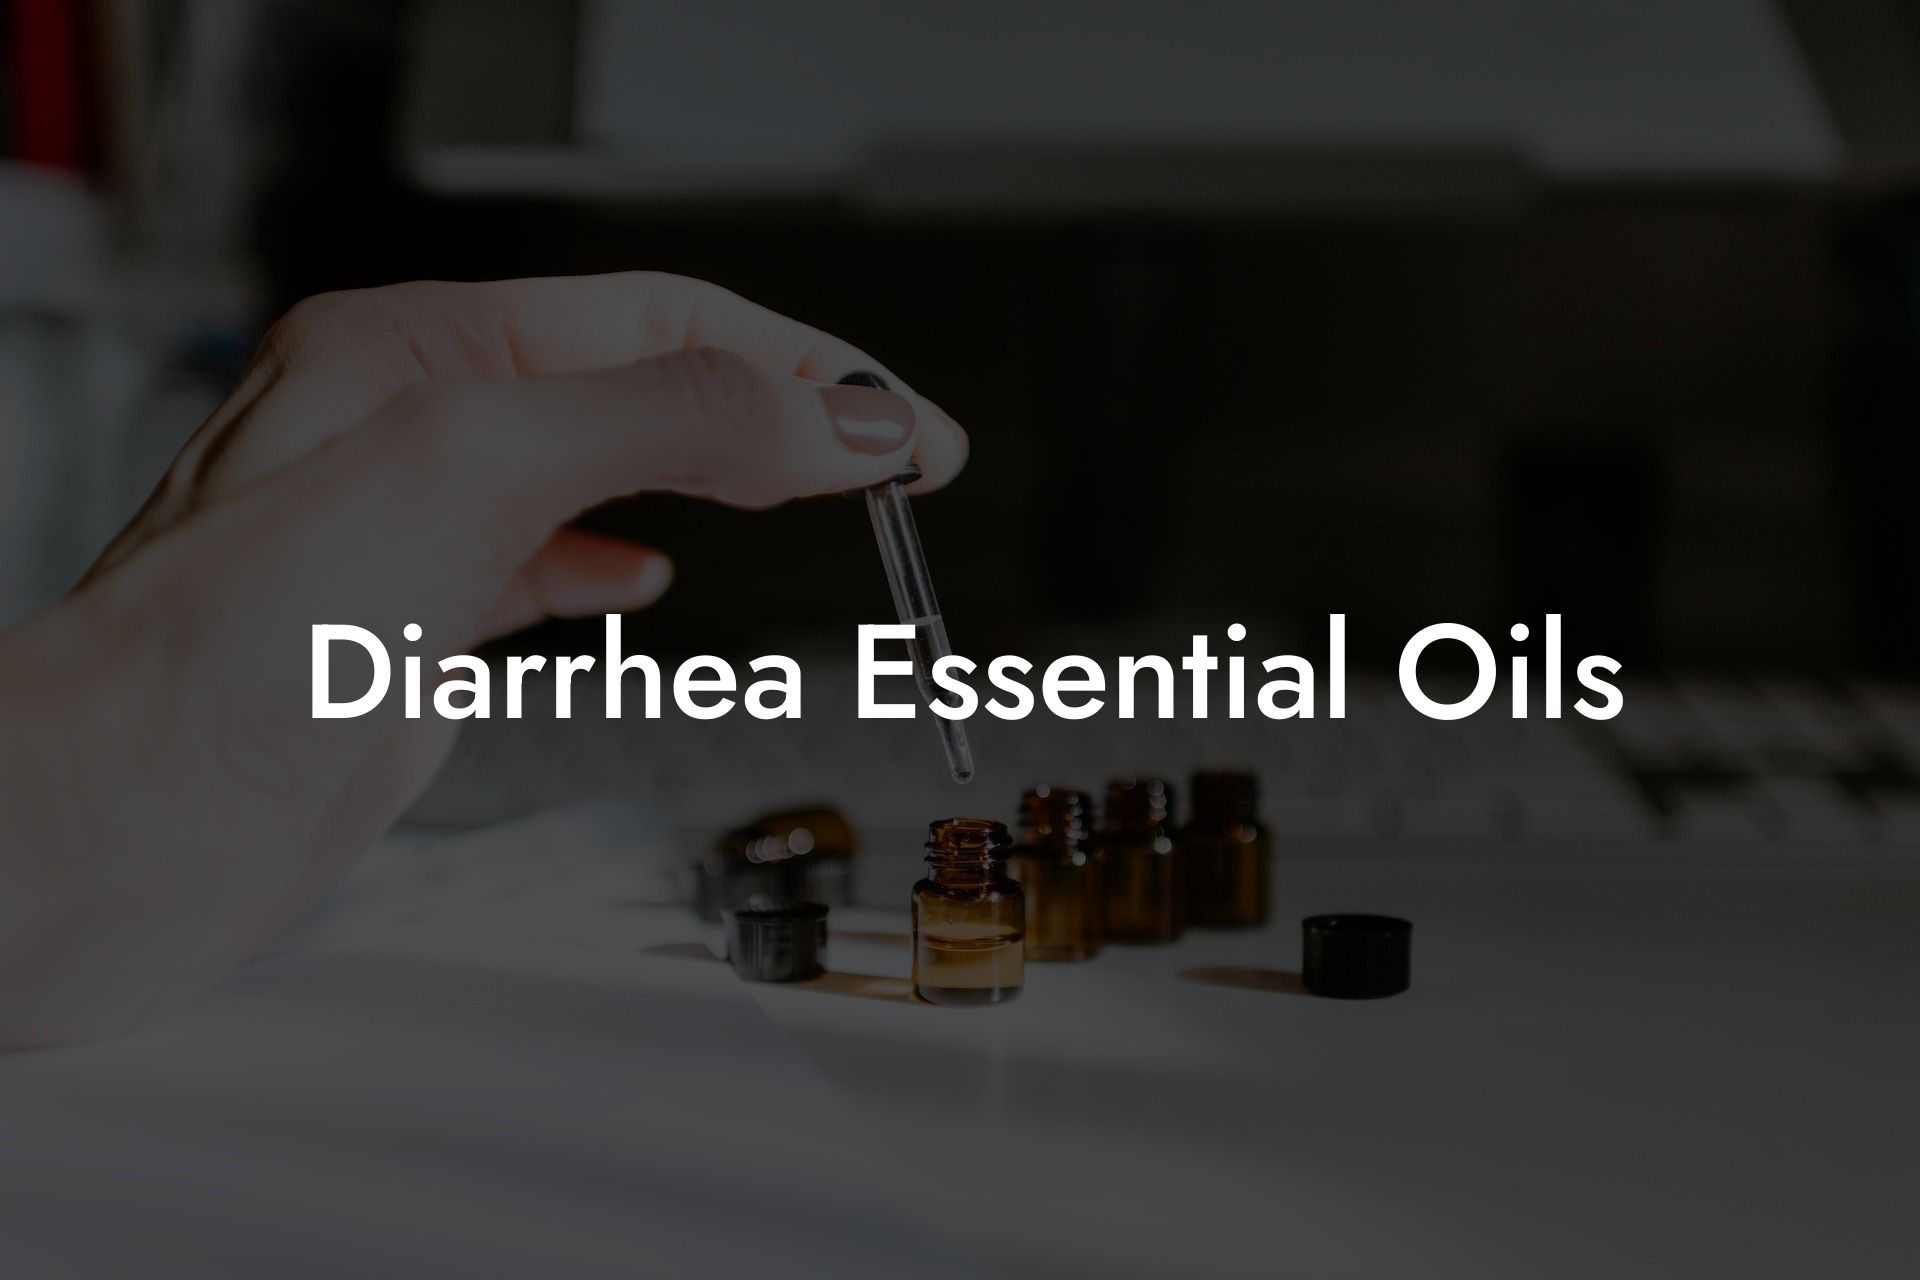 Diarrhea Essential Oils